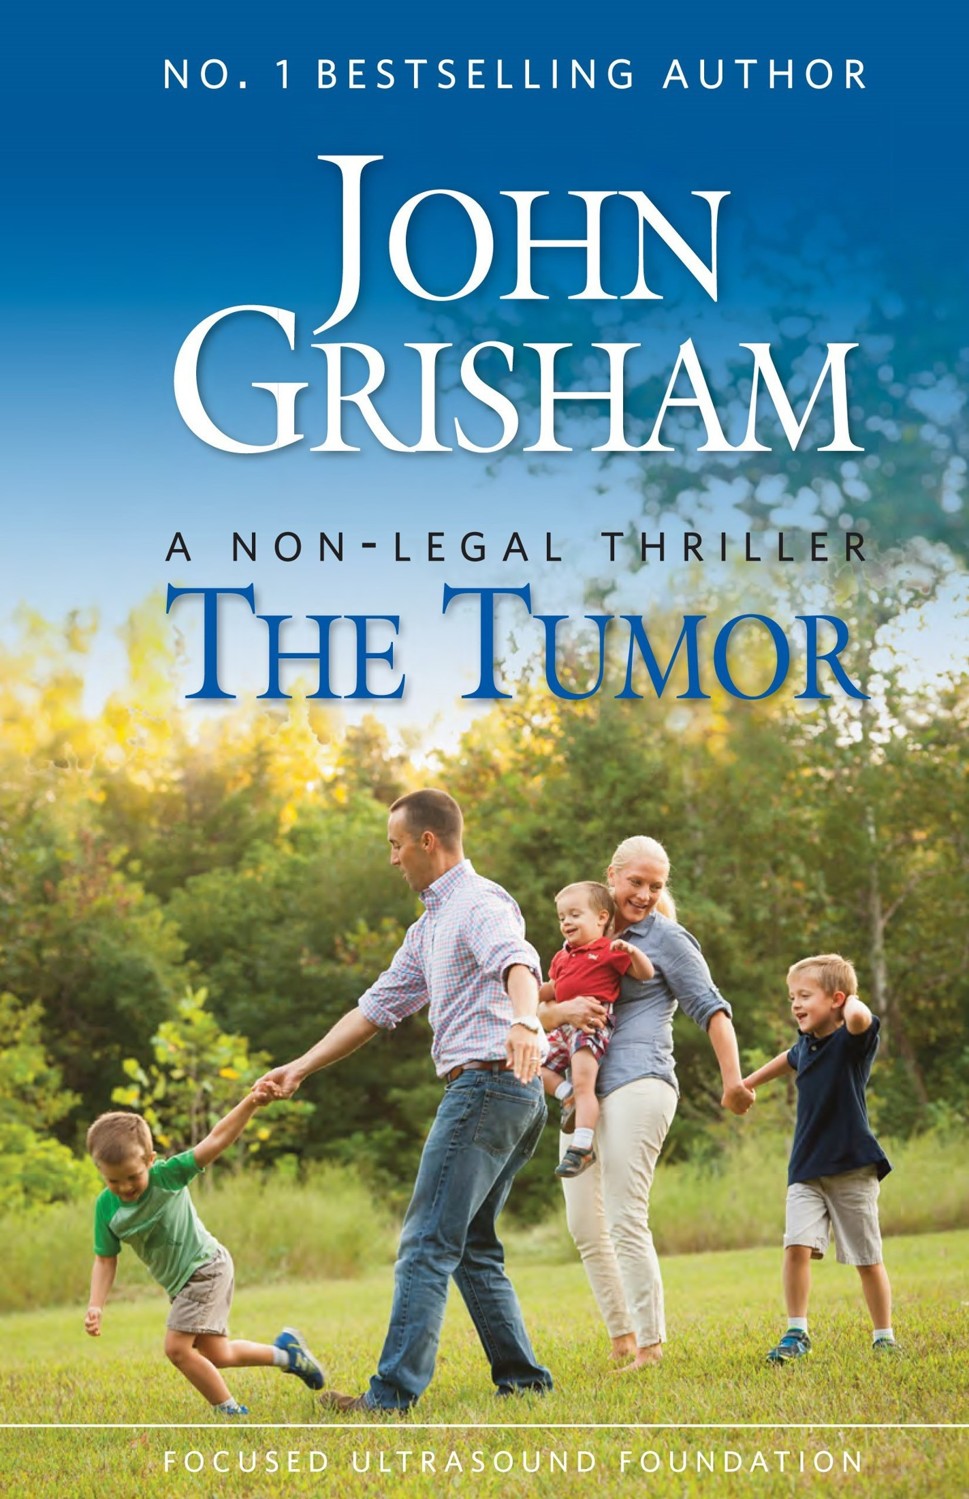 The Tumor: A Non-Legal Thriller by John Grisham